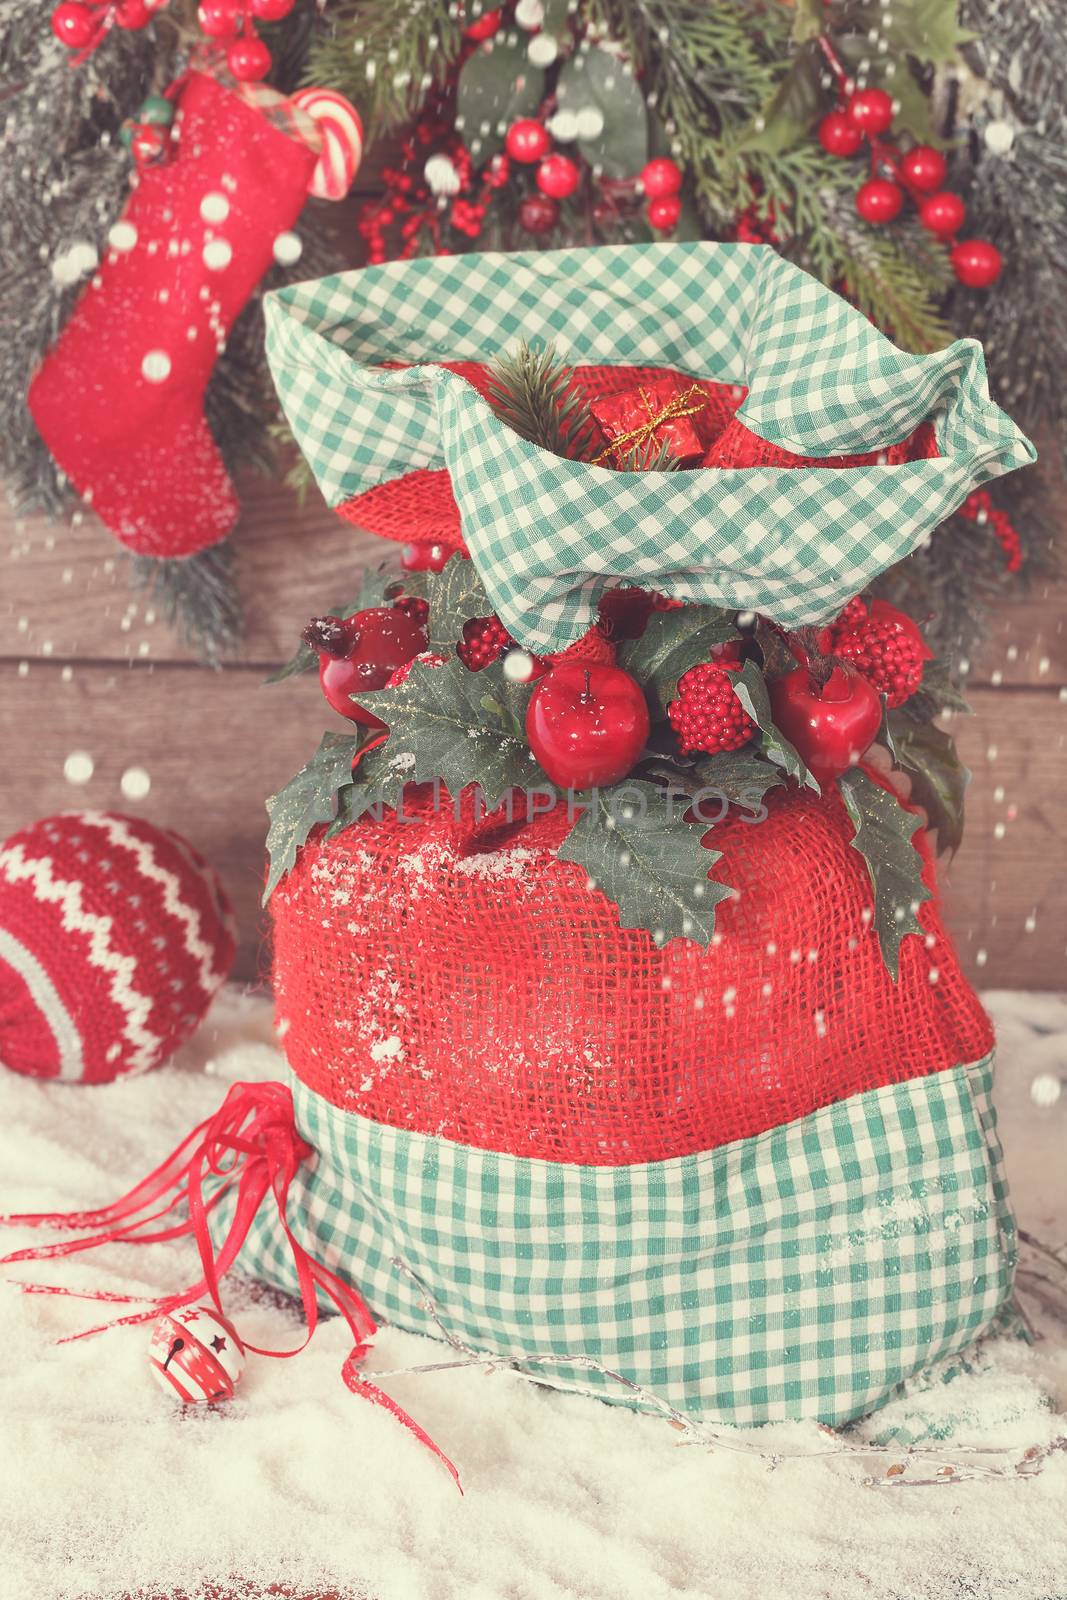 Christmas Santa sack with presents. by Slast20